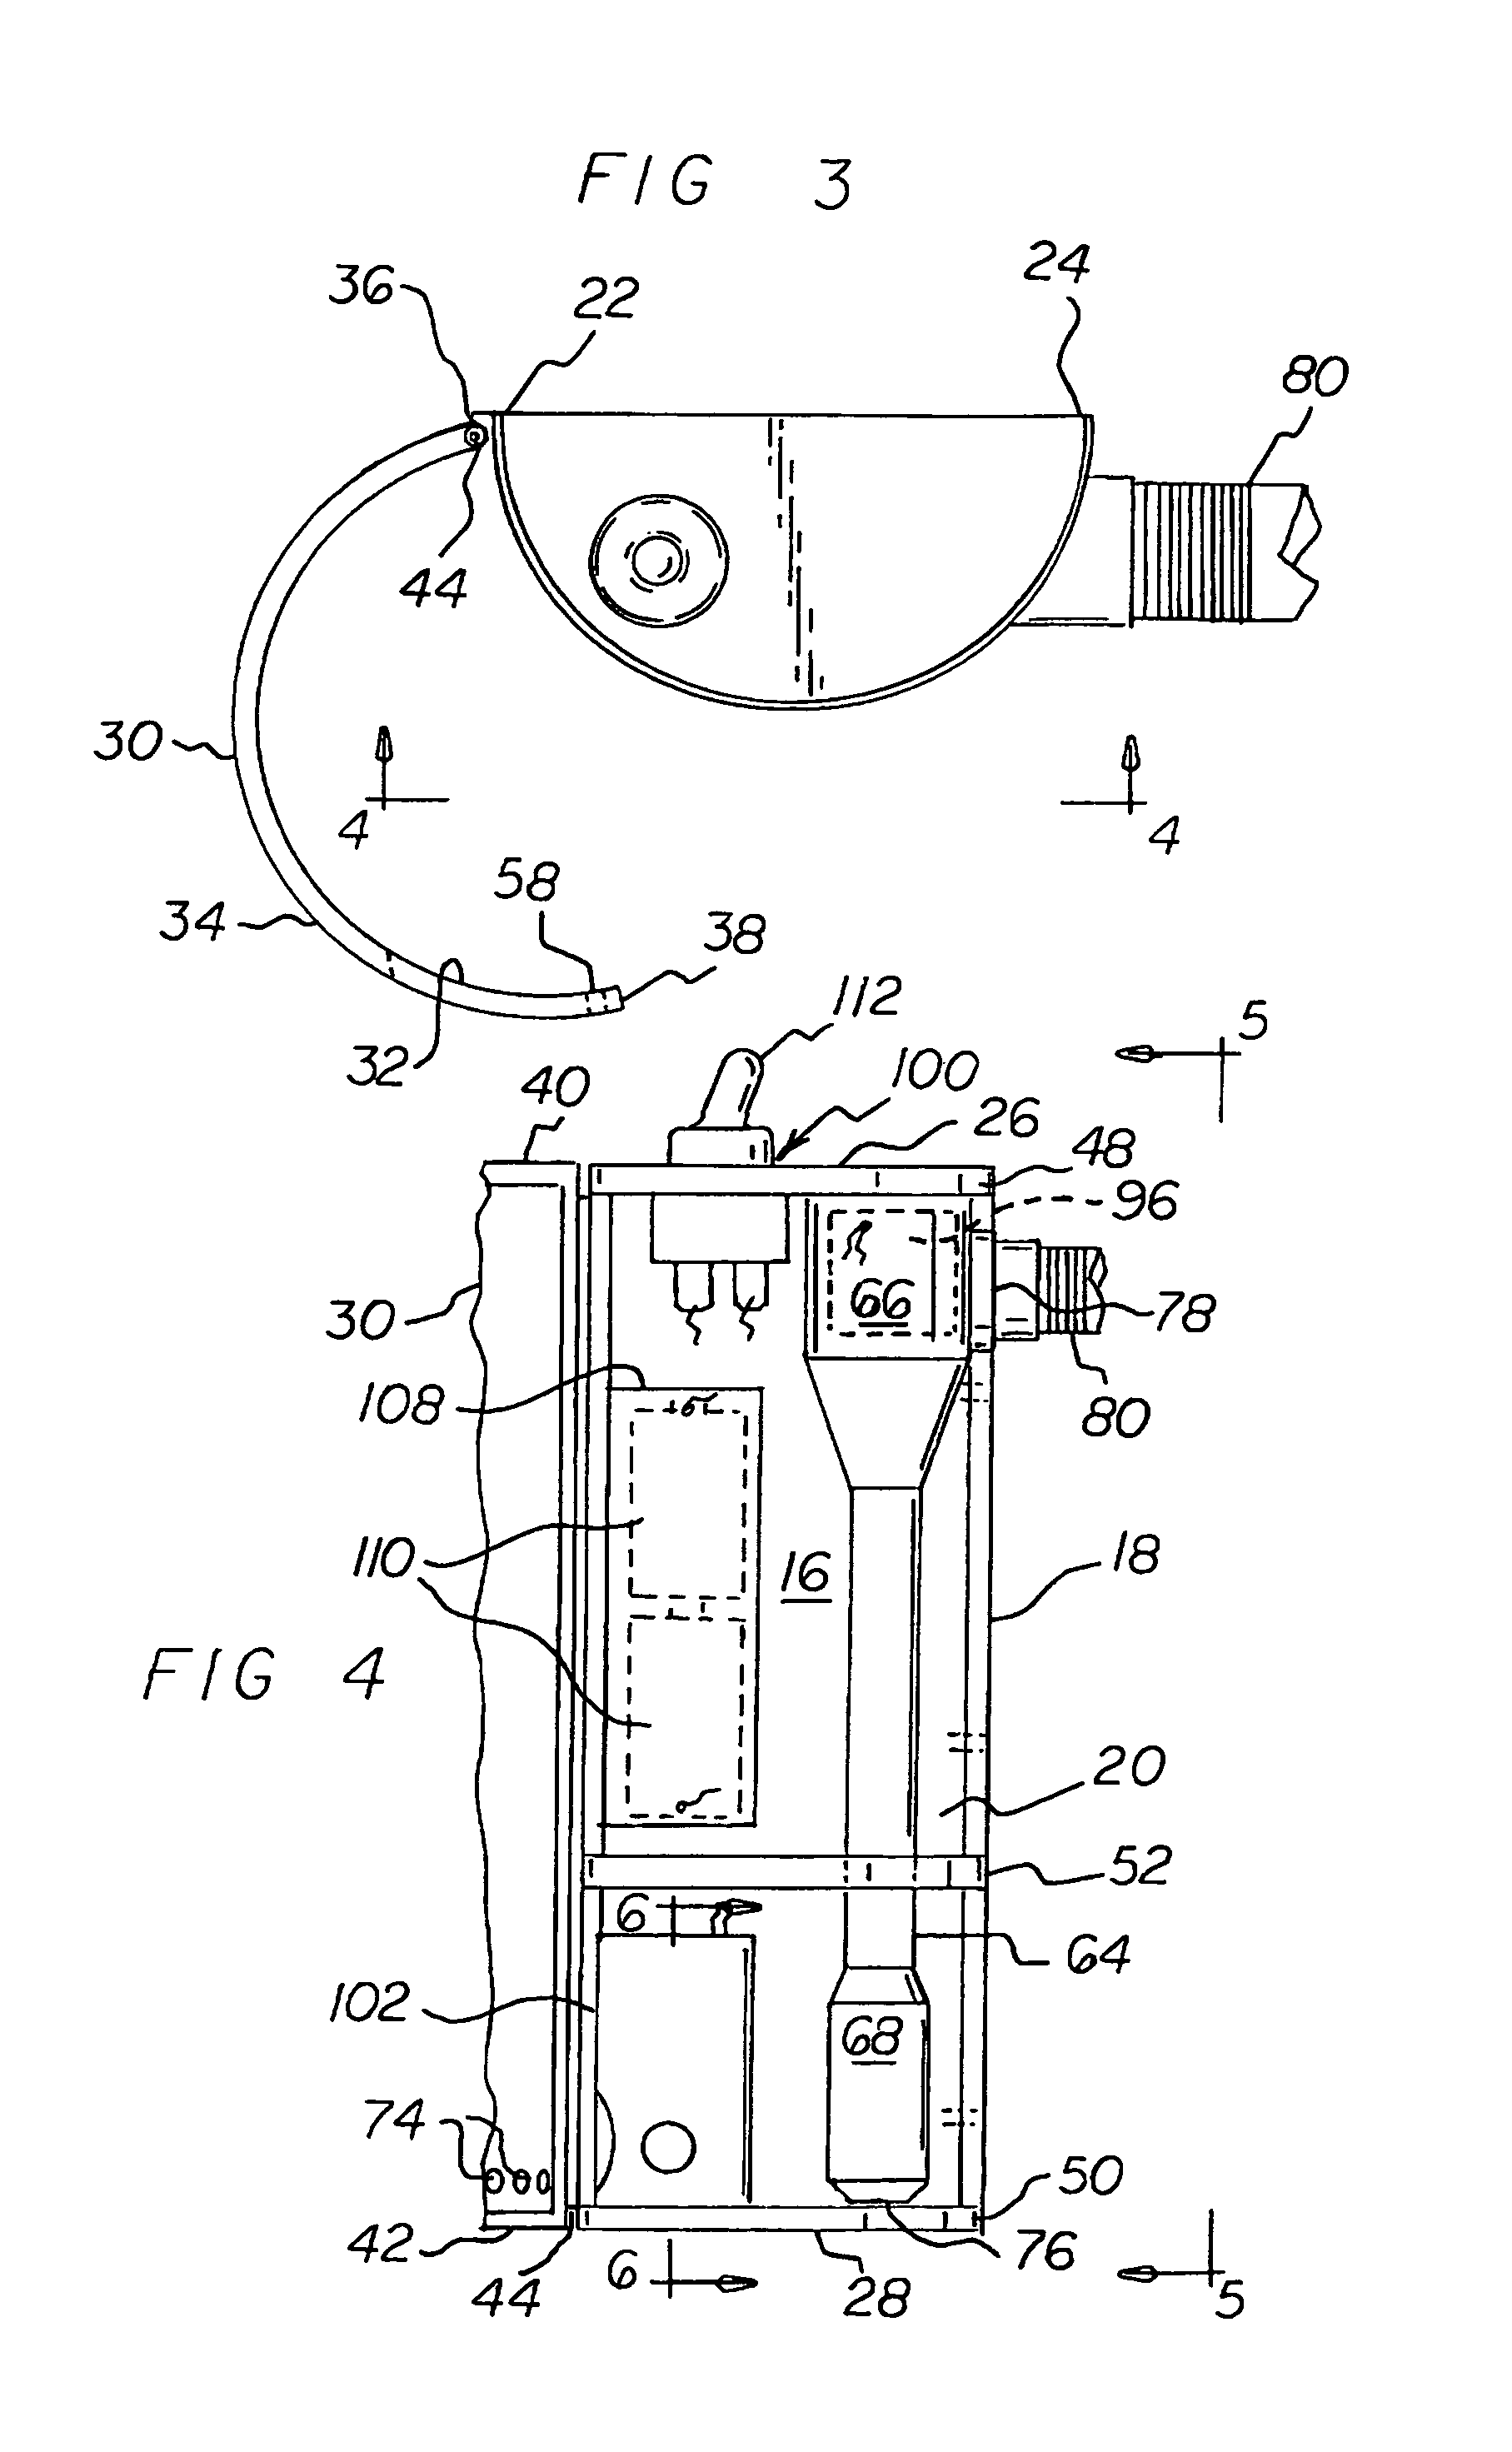 Automatic bilge pump system